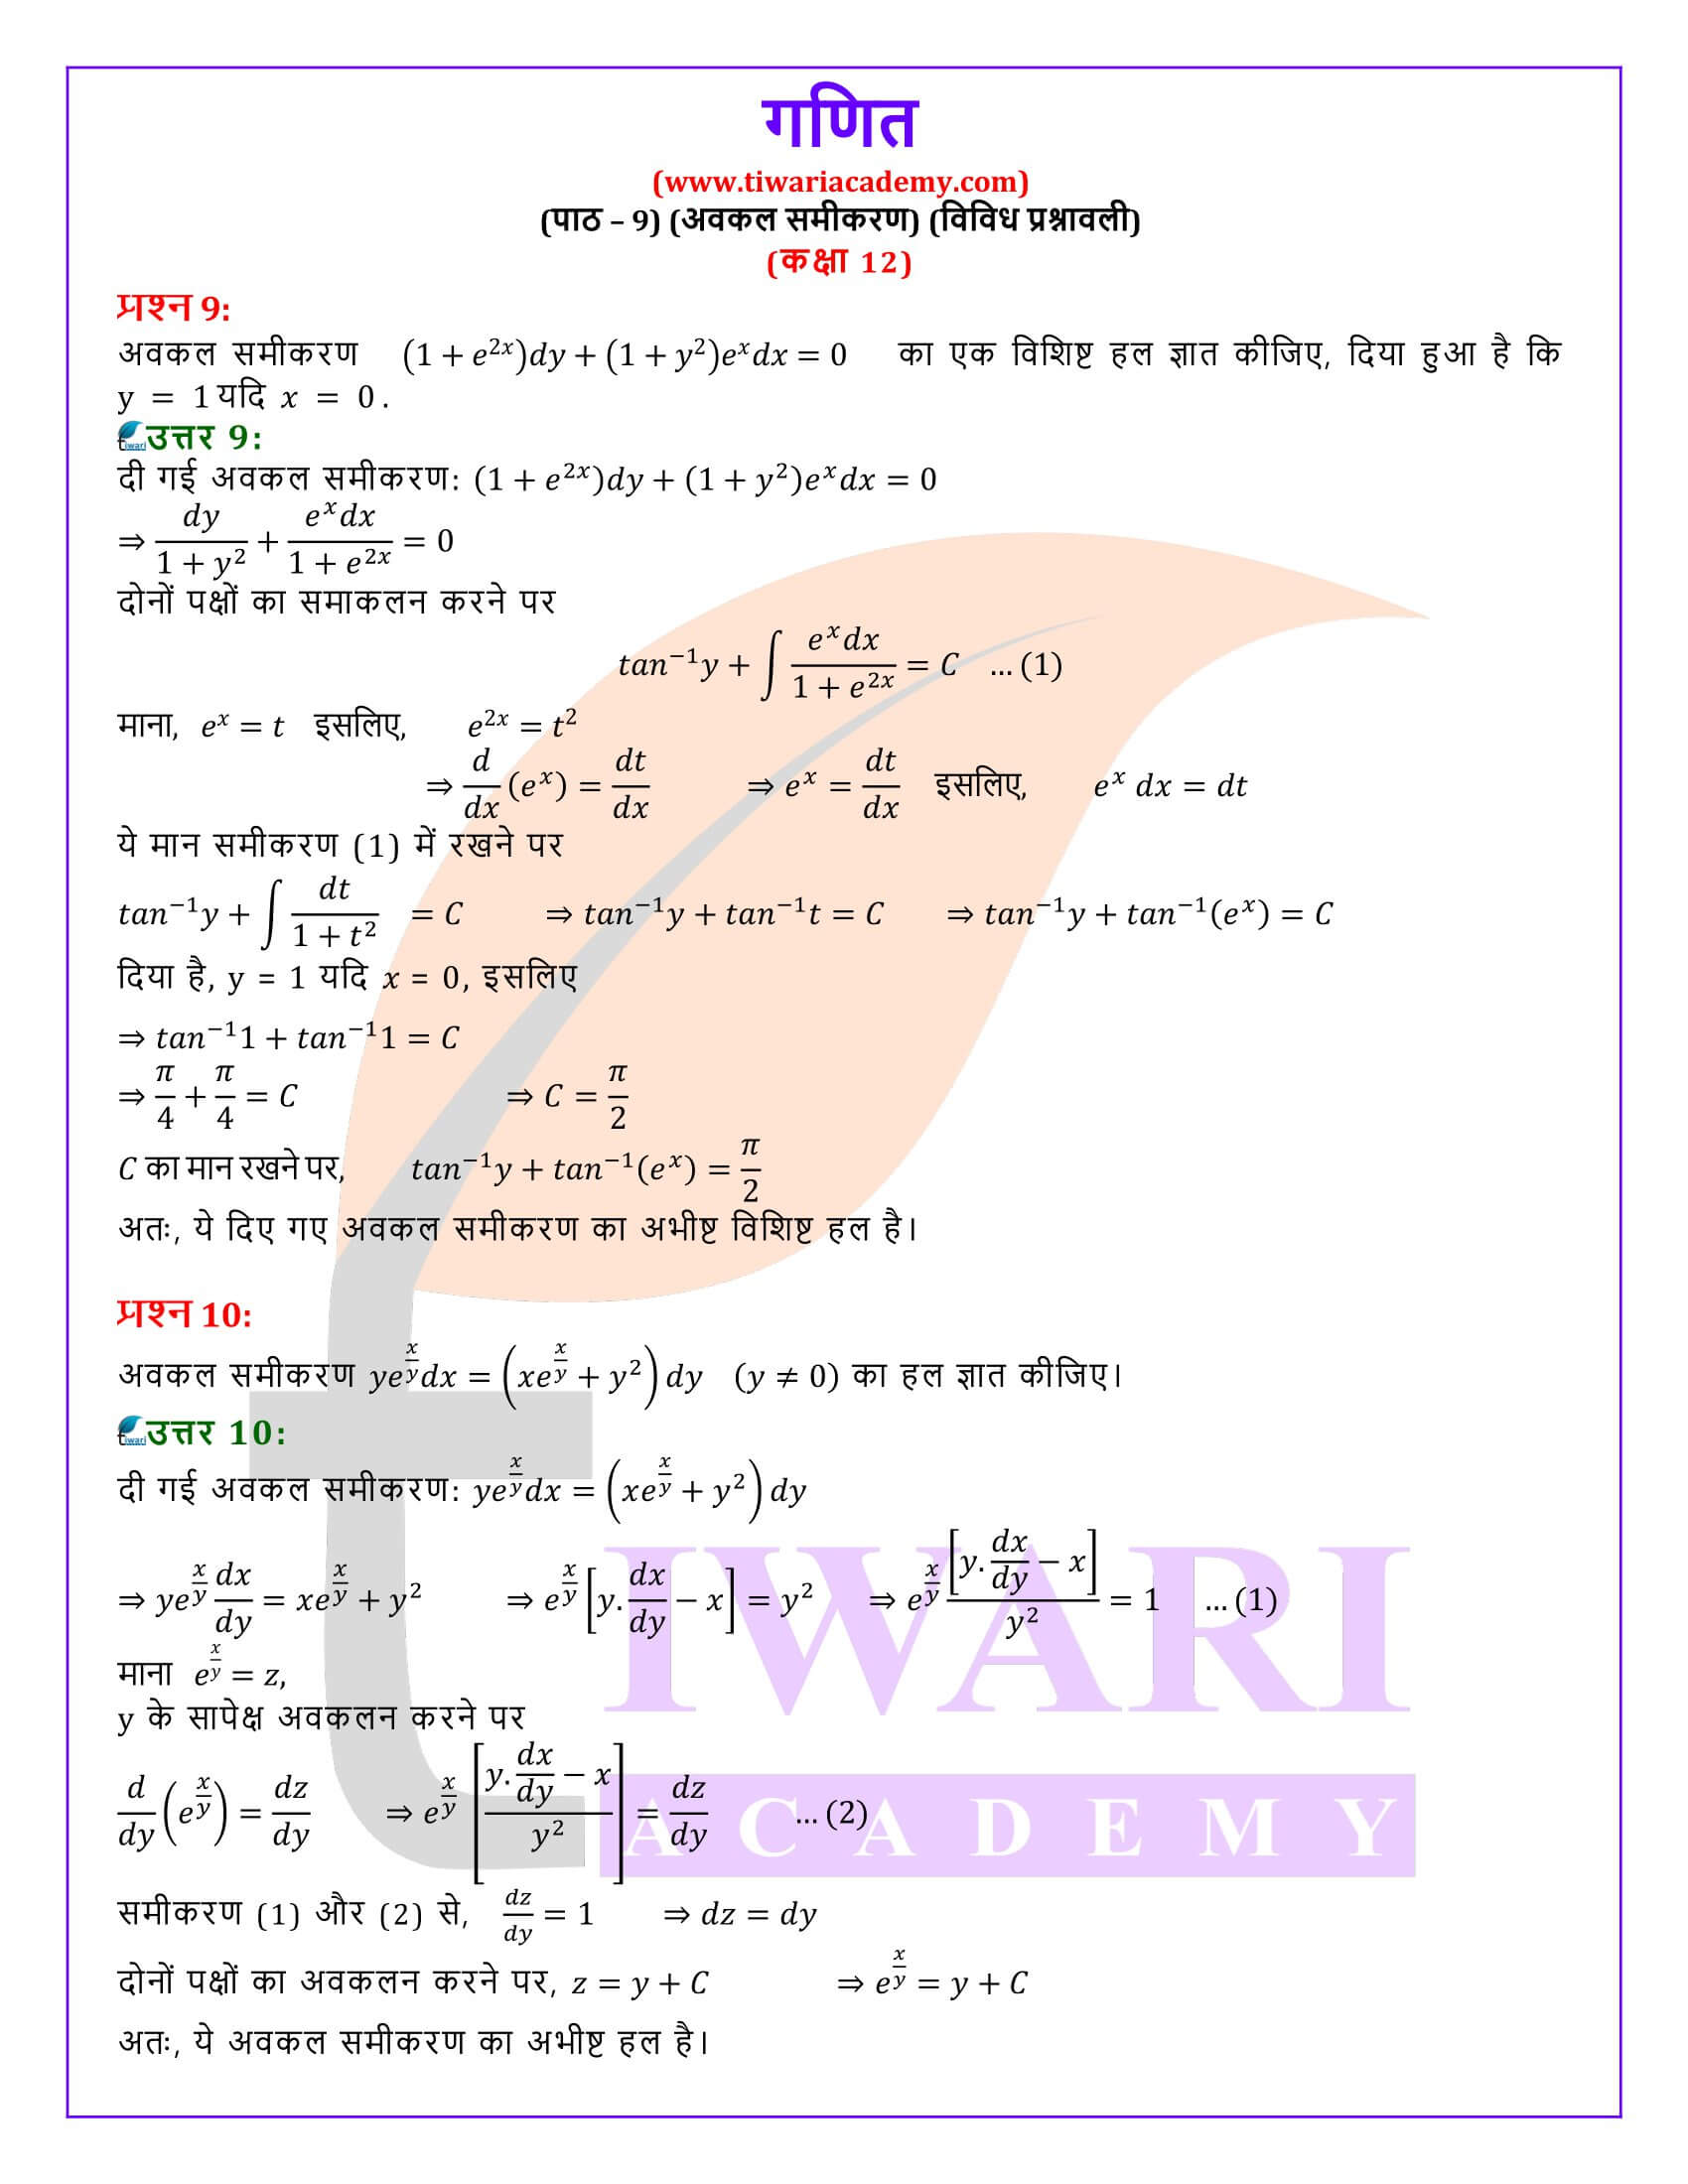 कक्षा 12 गणित अध्याय 9 विविध प्रश्नावली एनसीईआरटी के हल